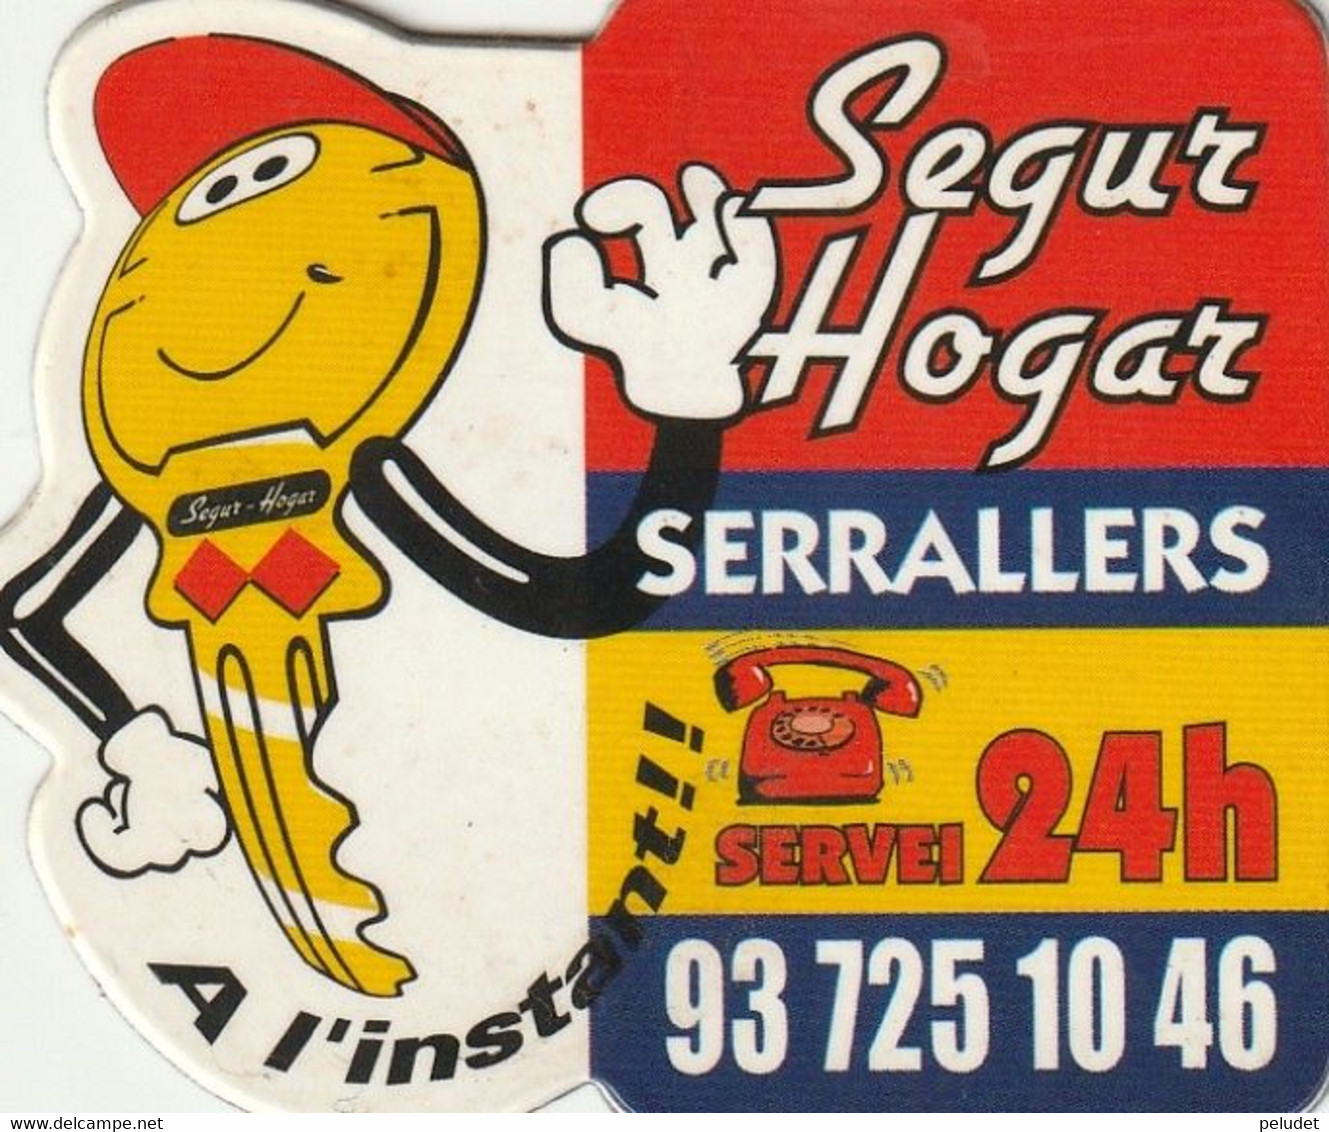 Magnet Imán, Segur Hogar, Serrallers, Servei 24h - Publicidad